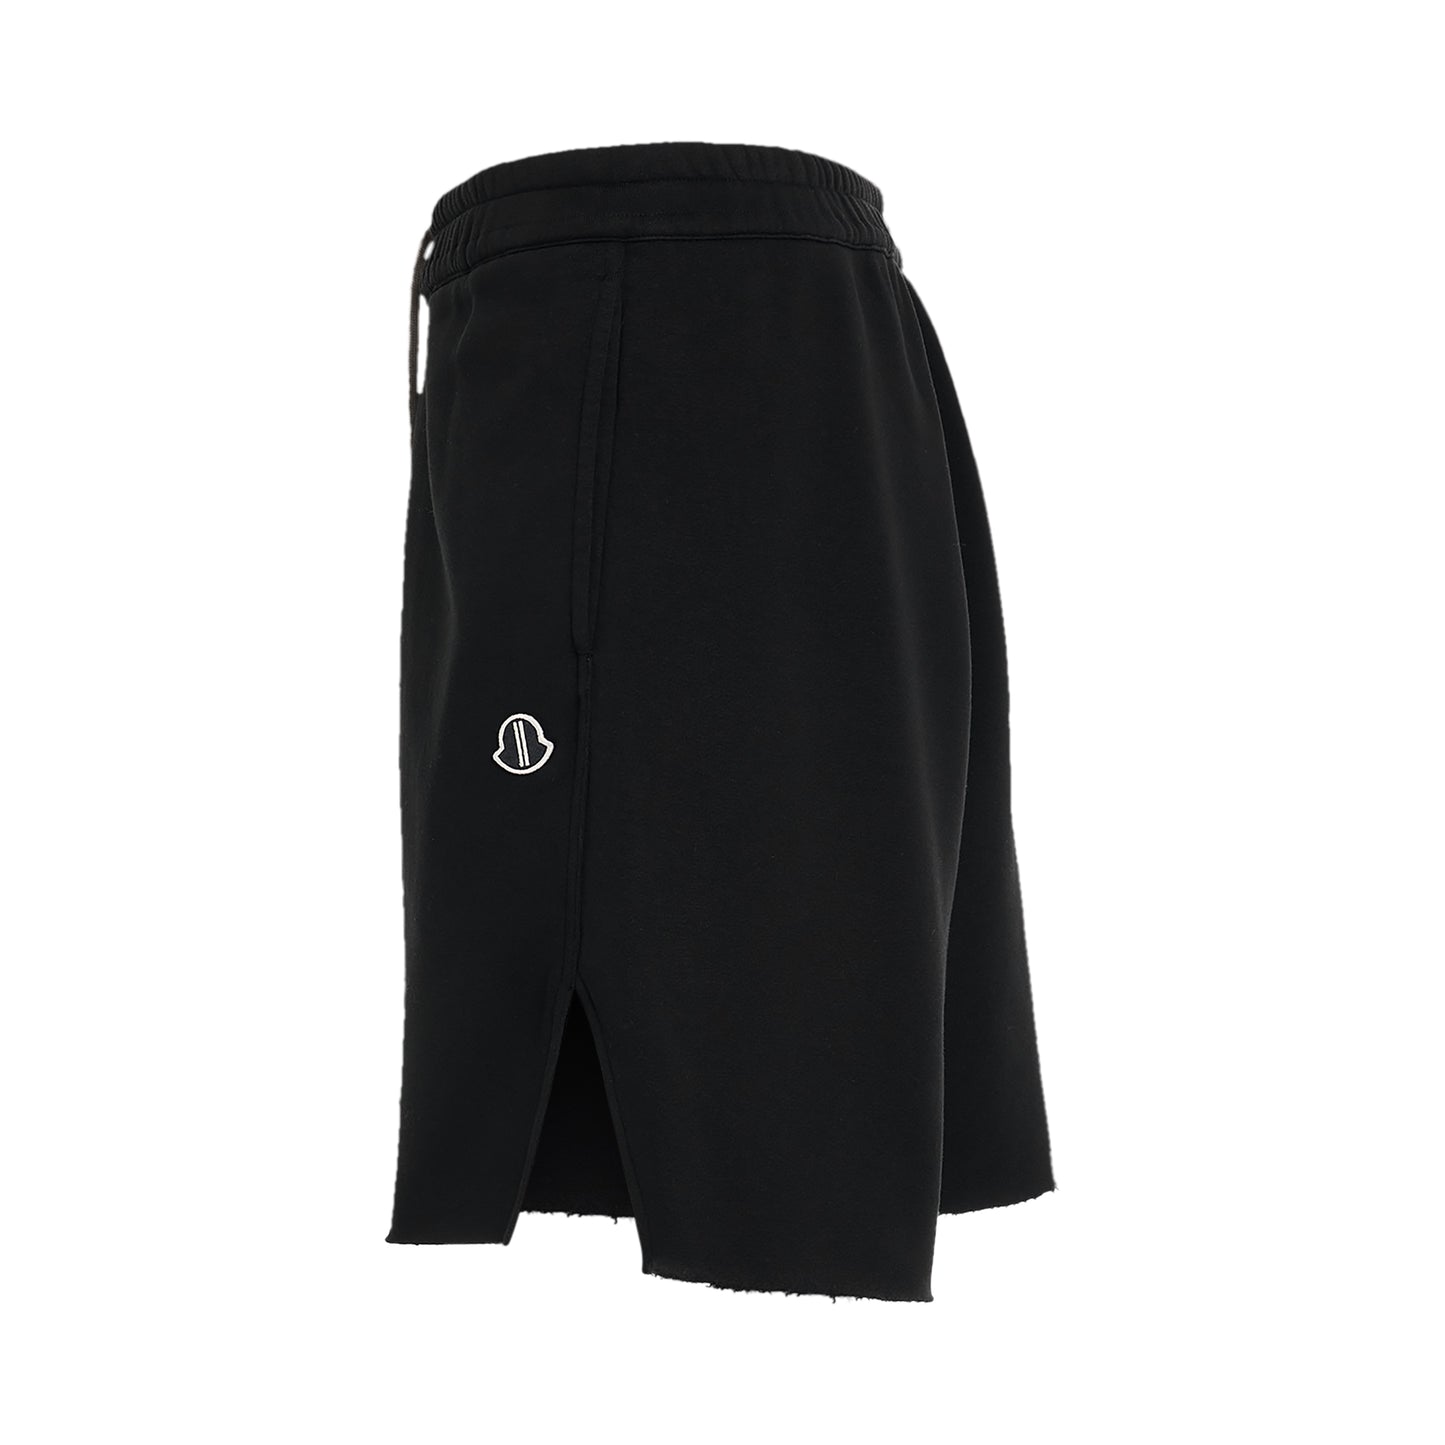 Moncler x Rick Owens Long Boxers Shorts in Black